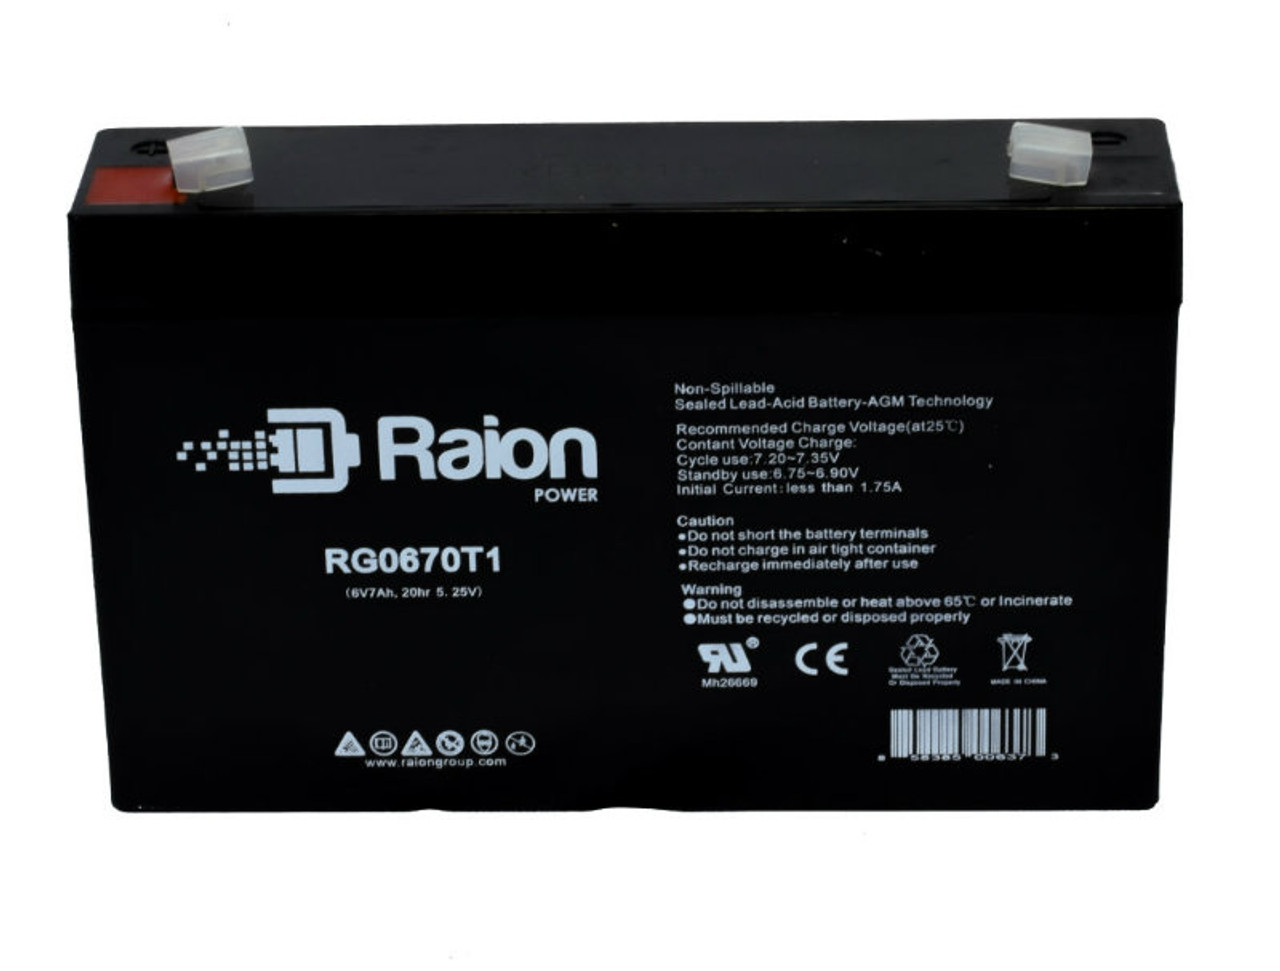 Raion Power RG0670T1 SLA Battery for Technacell TC670 OEM Battery